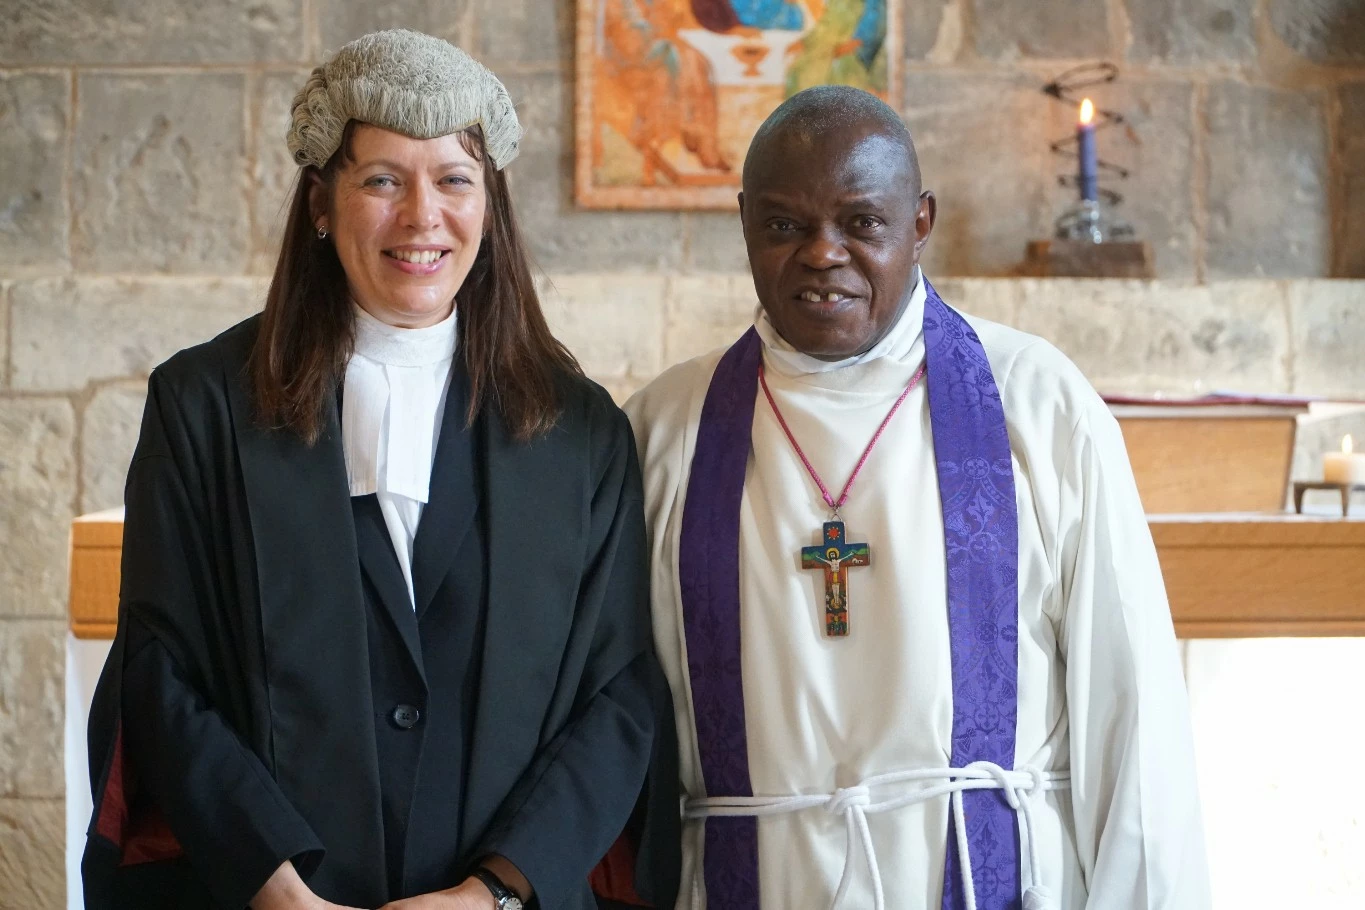 Louise Connacher with Archbishop Dr John Sentamu